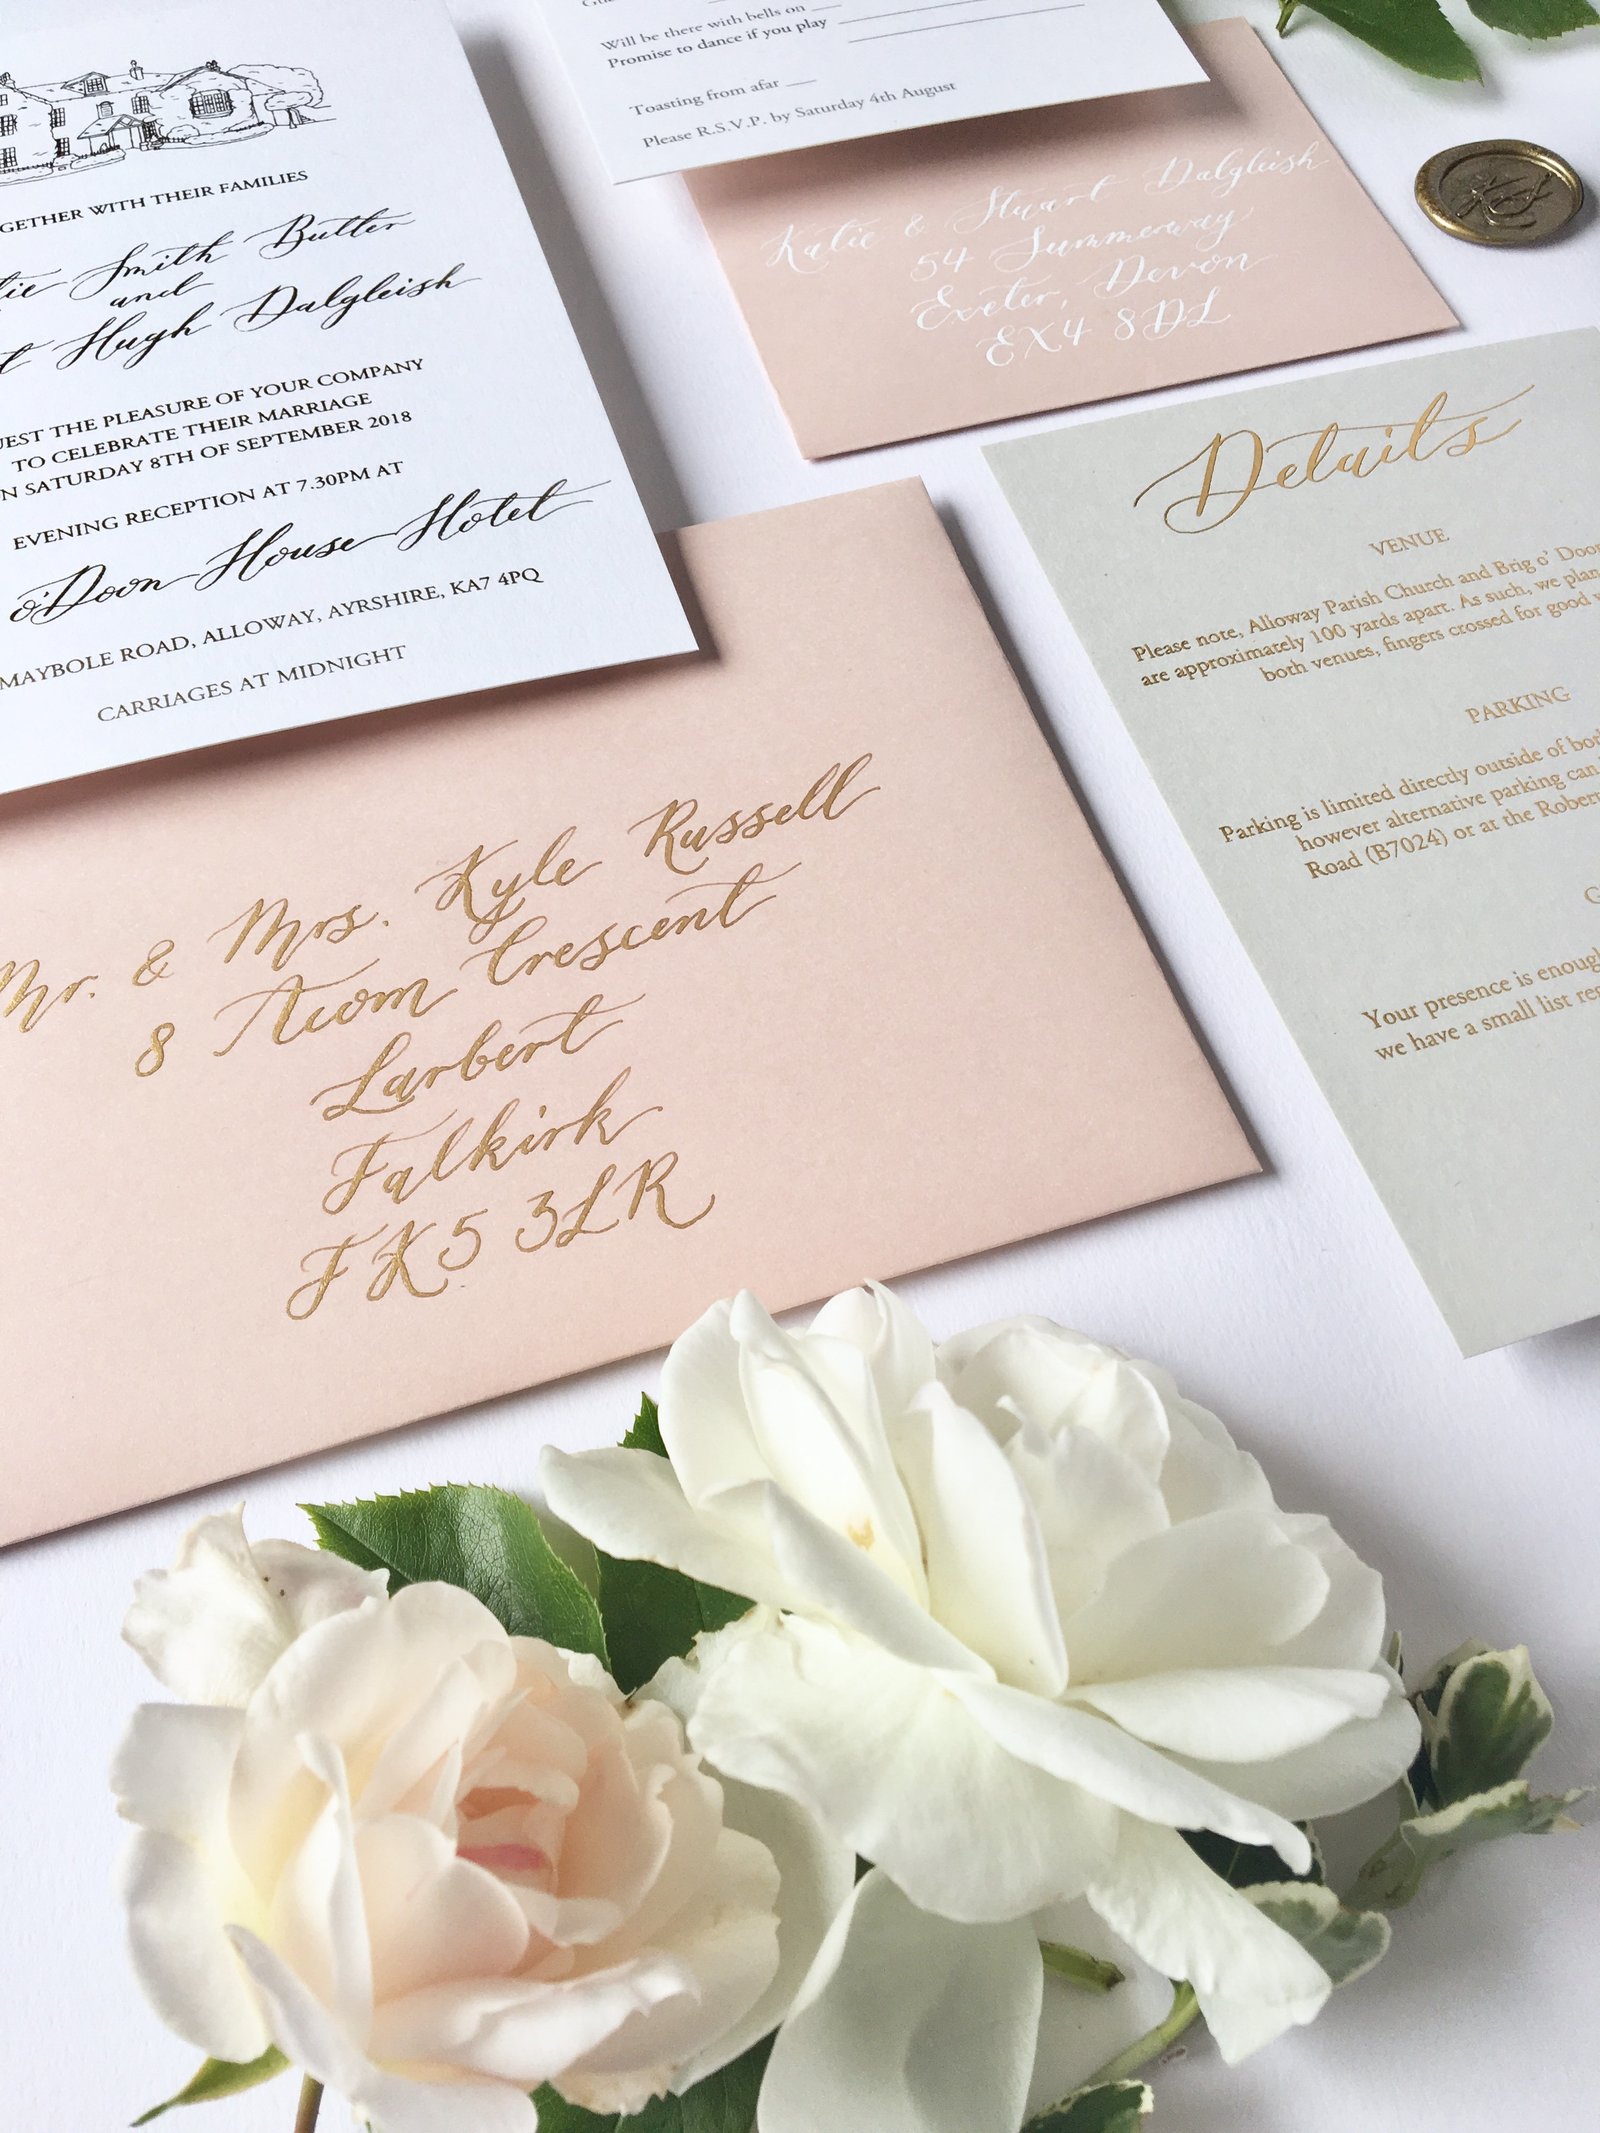 Blush and gold wedding invitation envelopes